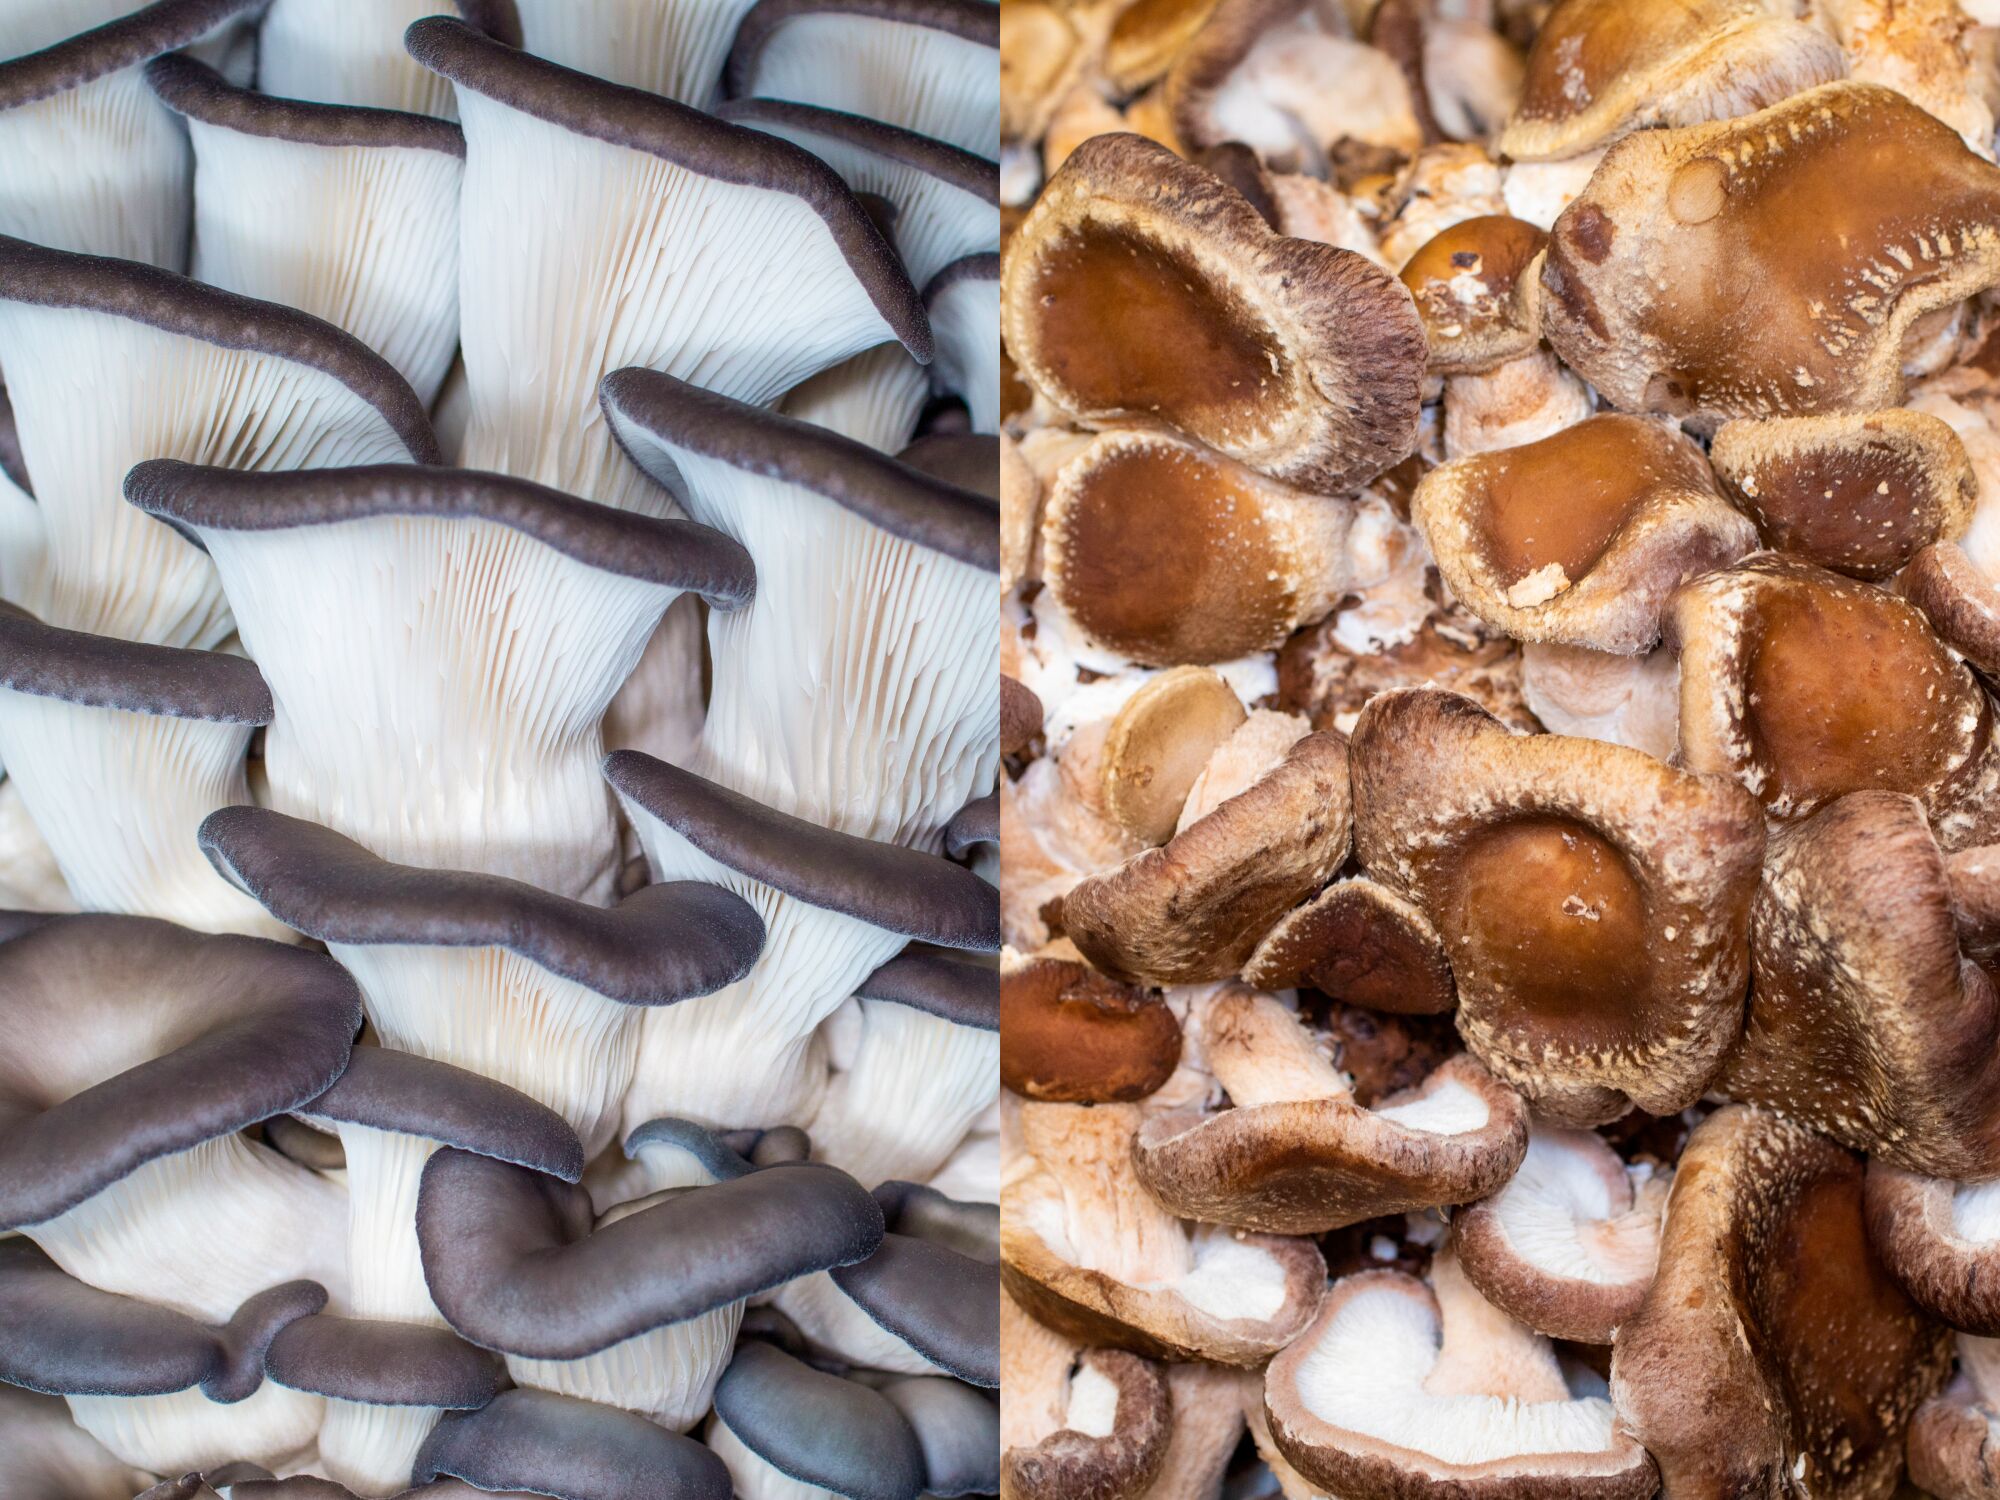 Closeup photos of blue oyster mushrooms, left, and shiitake mushrooms, right, at Smallhold.